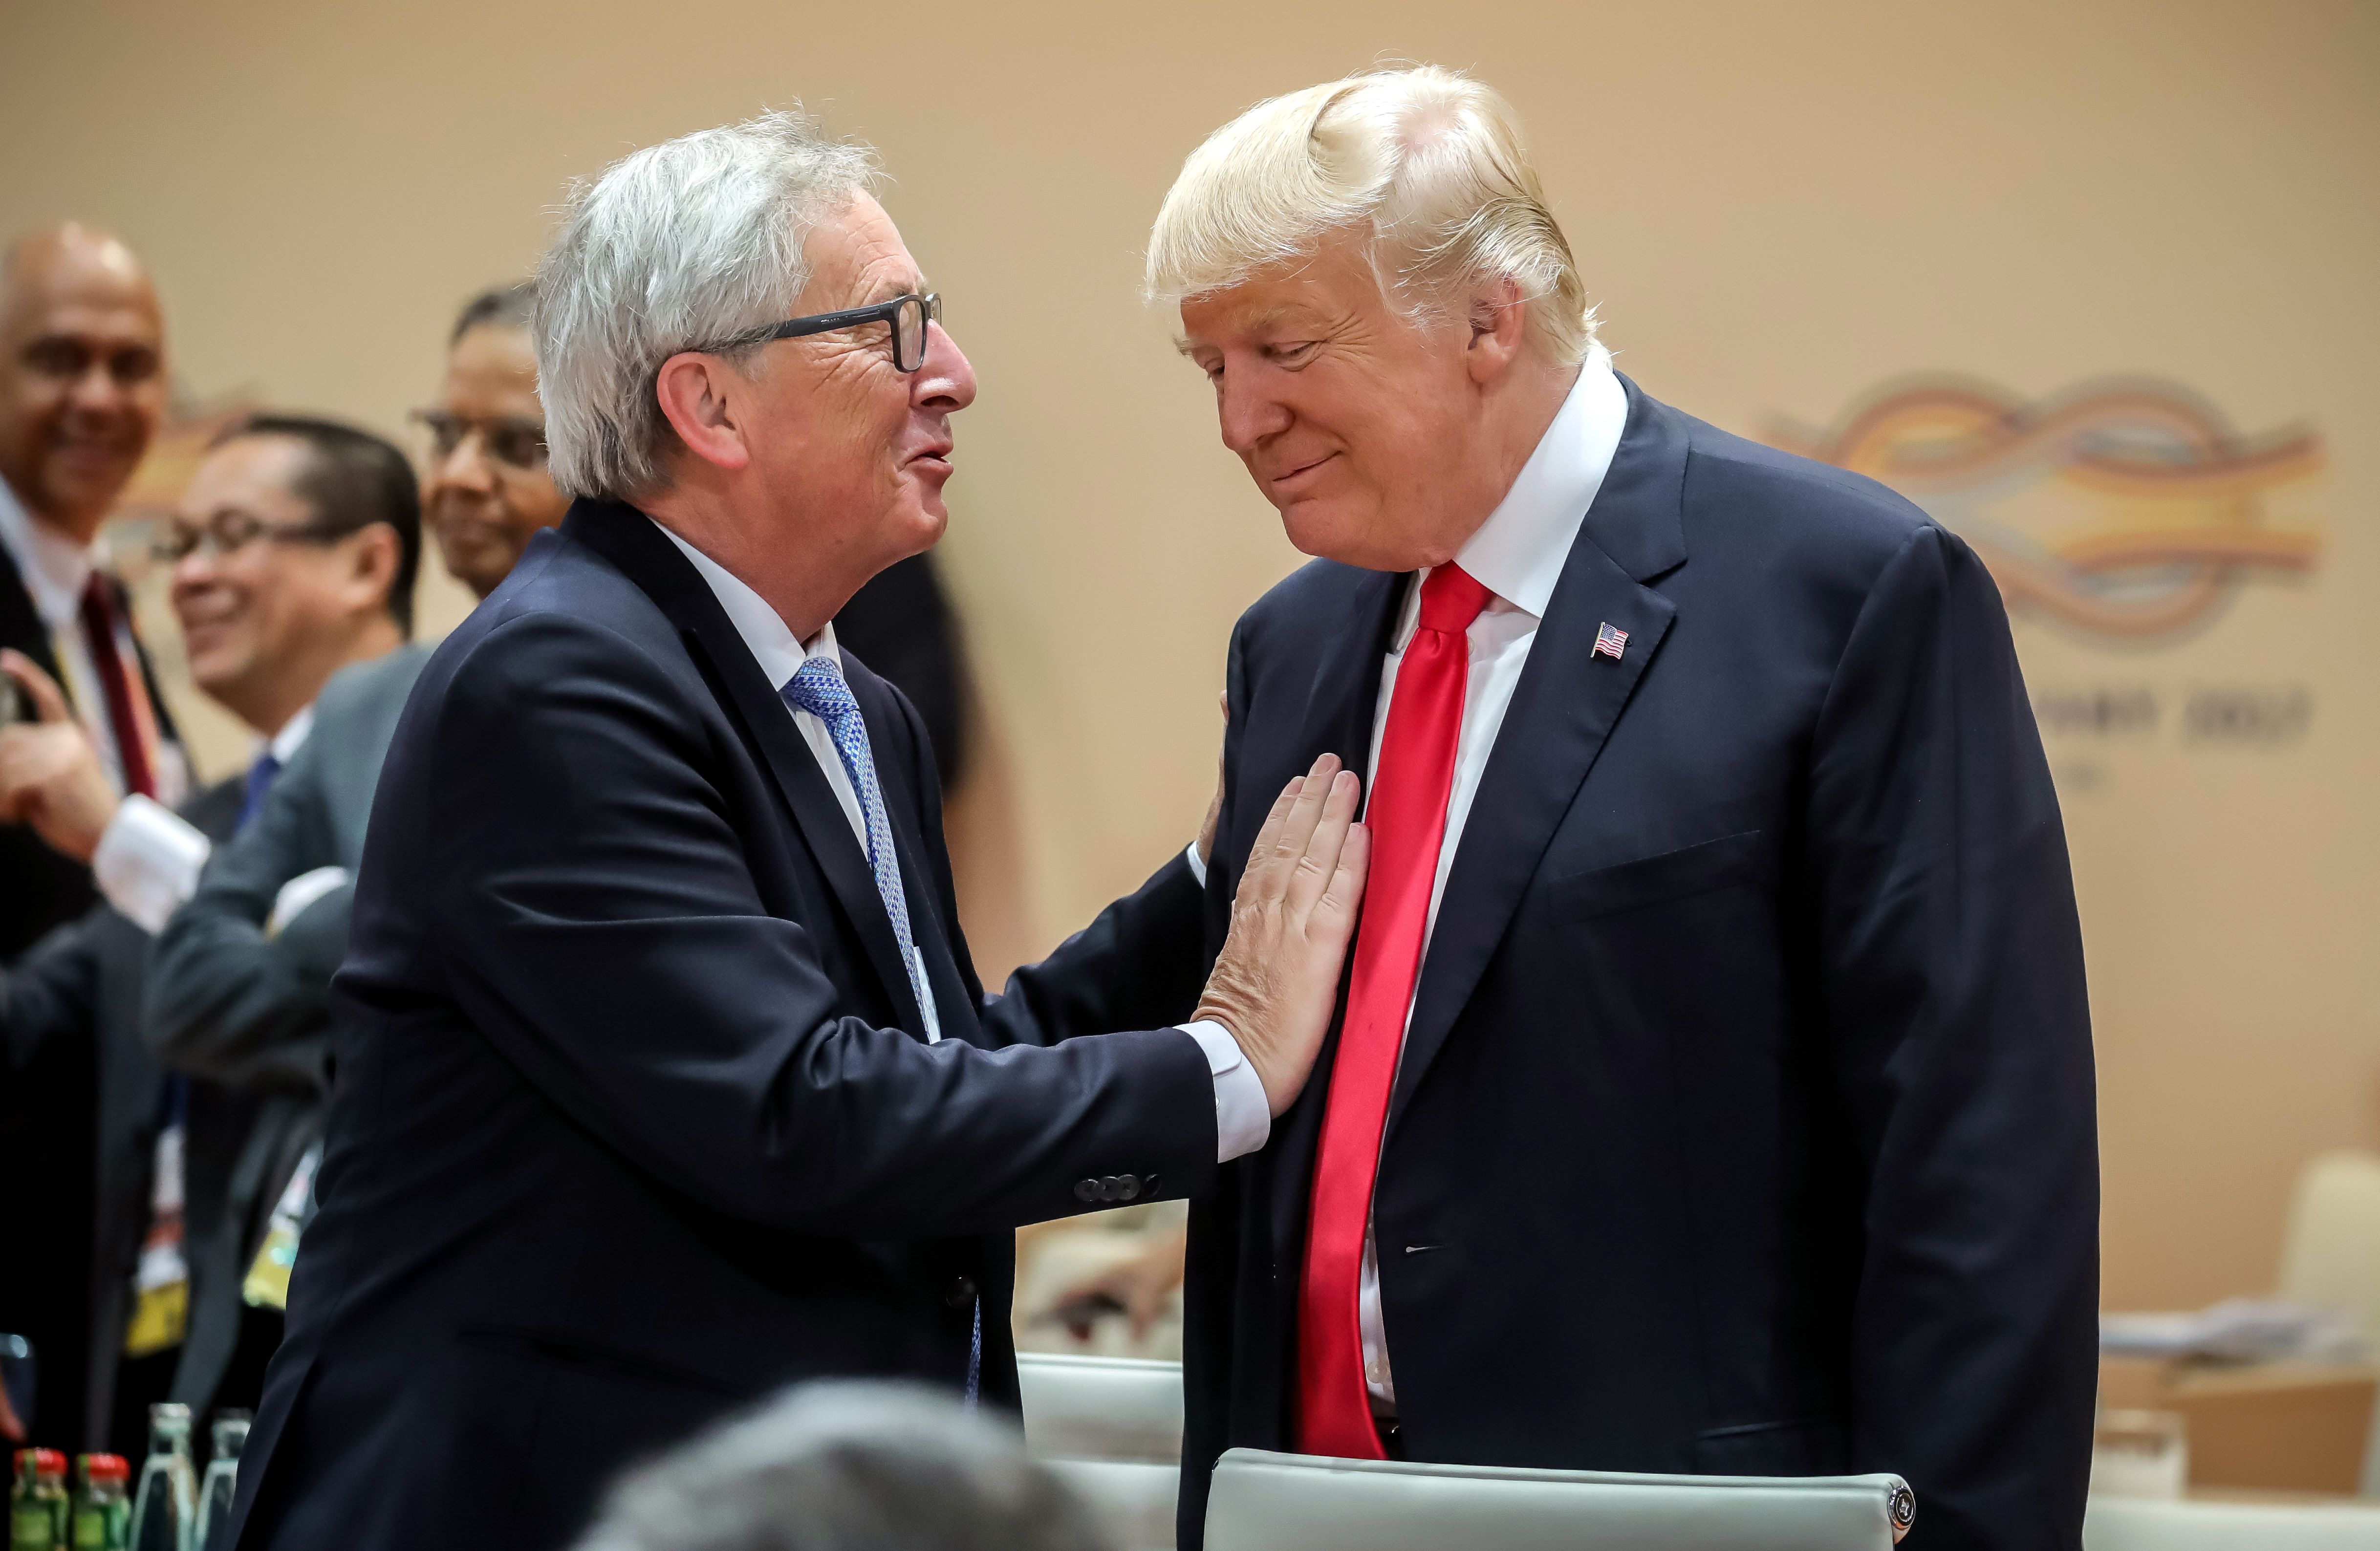 European Commission President Jean-Claude Juncker and President Trump talk at the 2017 G20 Summit in Hamburg, Germany.